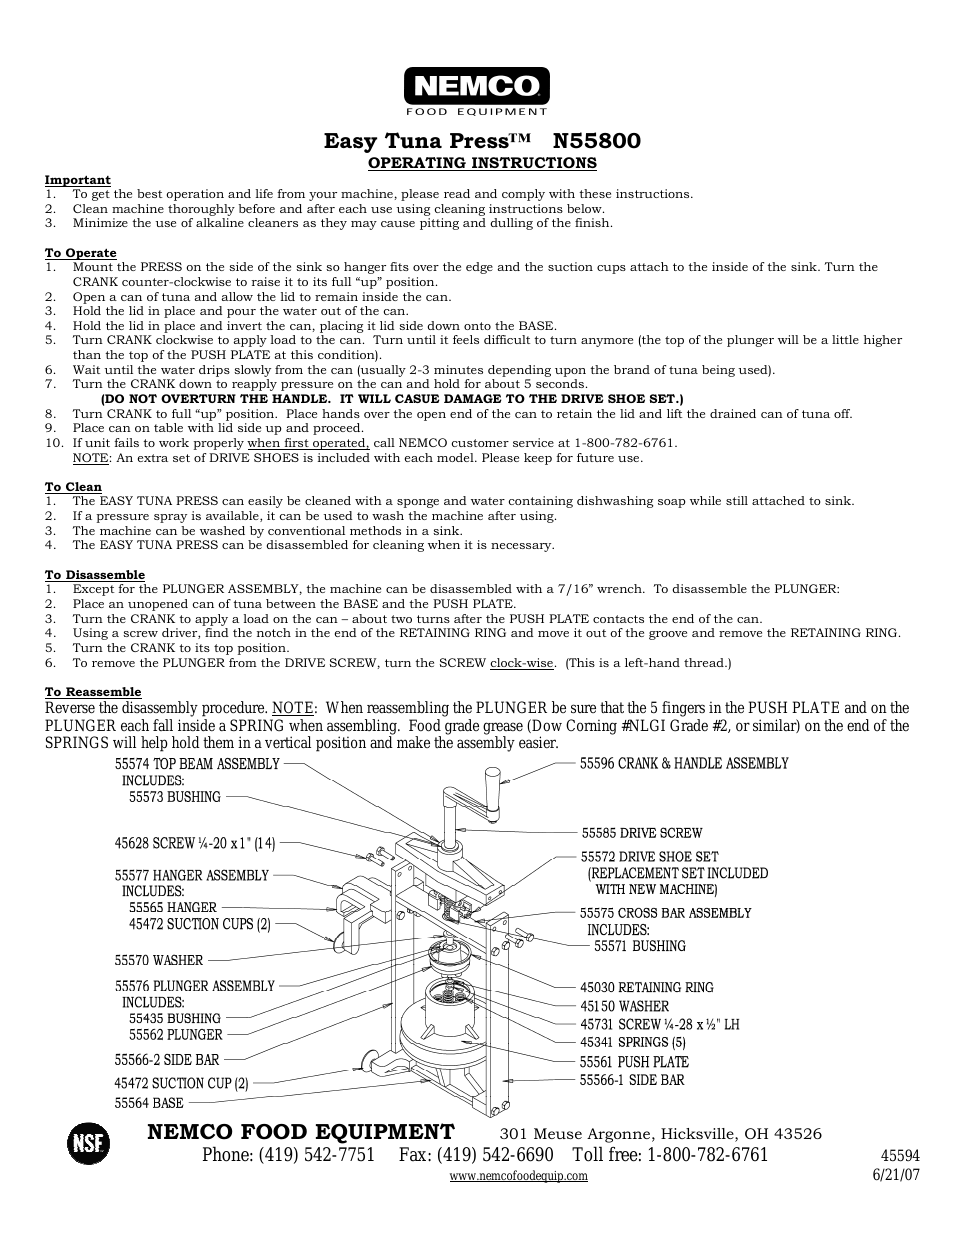 Easy Tuna Press - Operations Manual